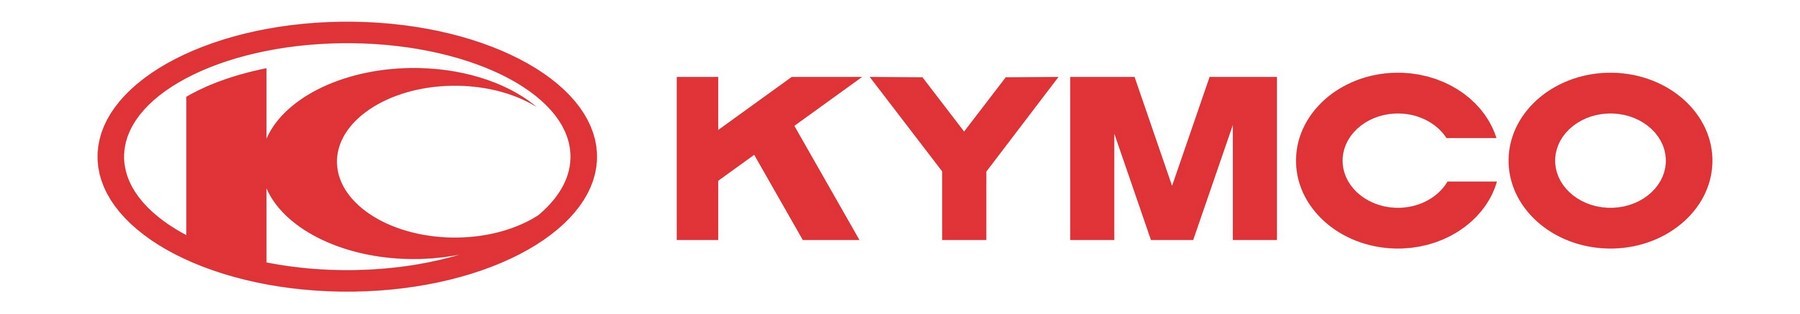 Kymco Motorcycle Logo [kymco.com]